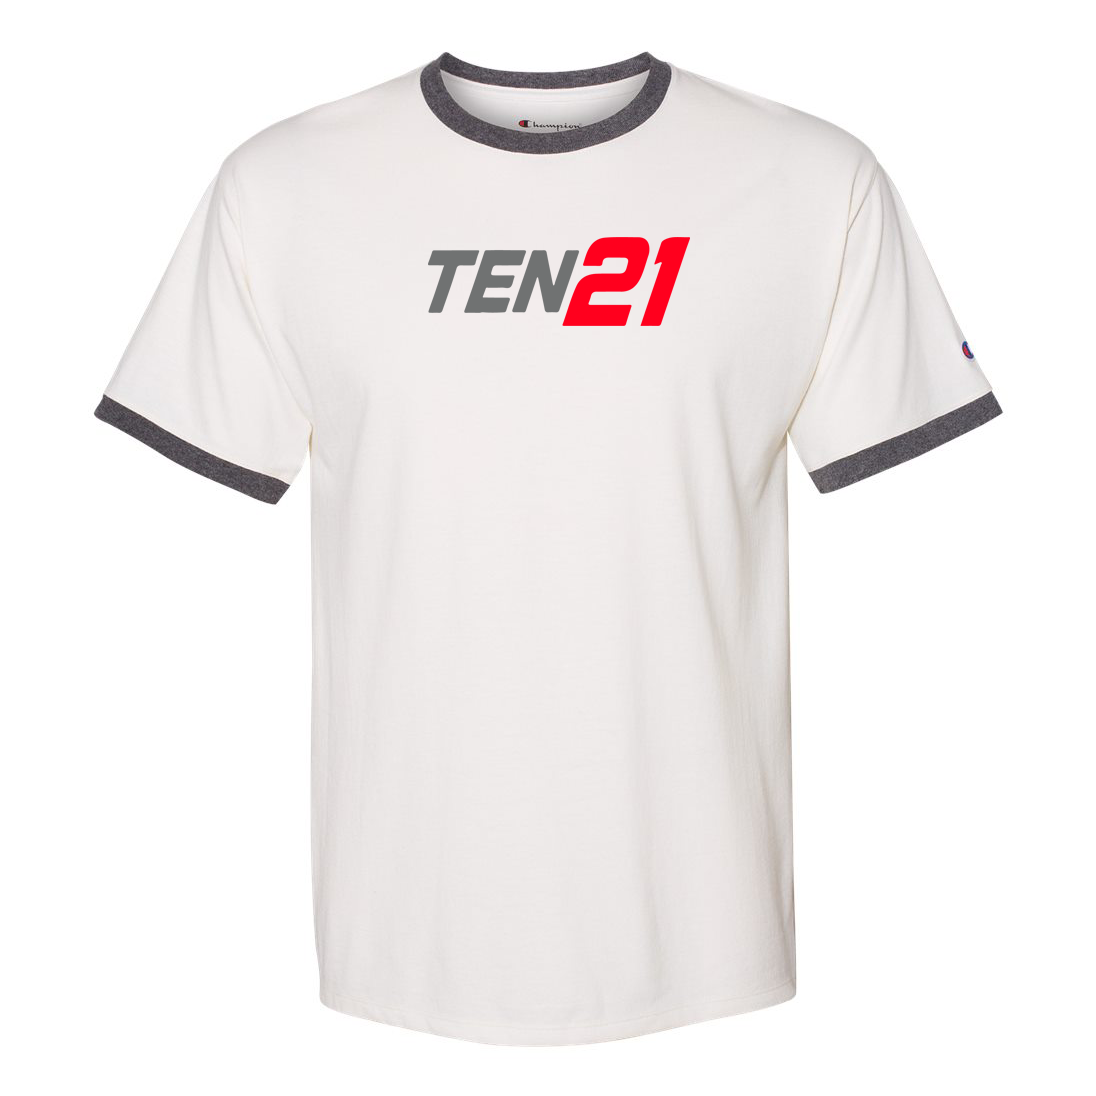 TEN21 Lacrosse Champion Premium Ringer Shirt